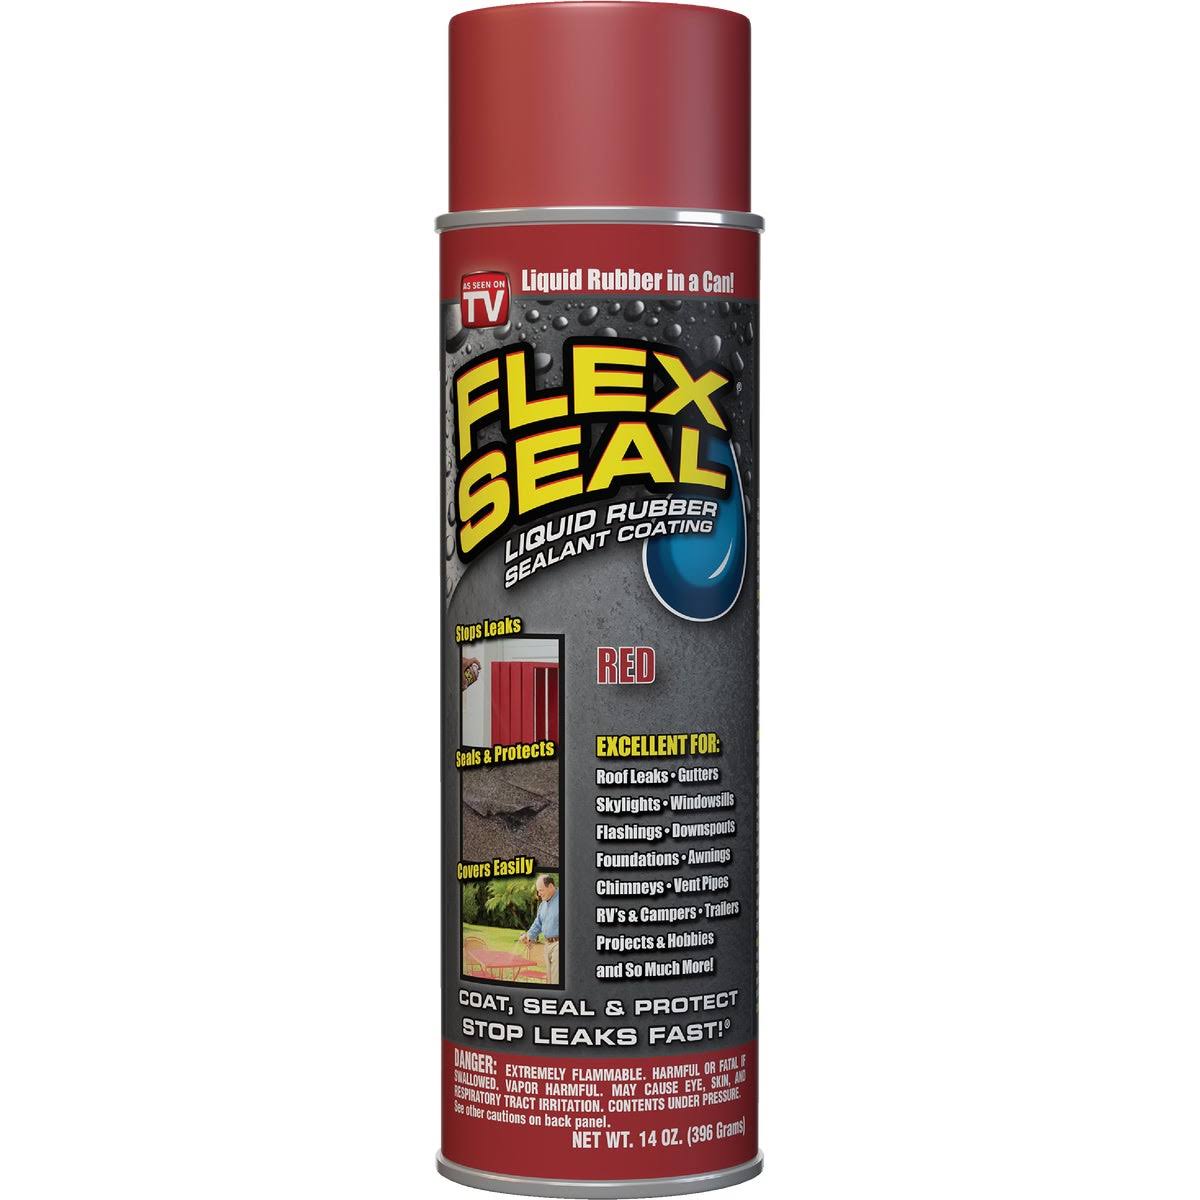 Flex Seal Spray Rubber Sealant Coating - Red, 14oz